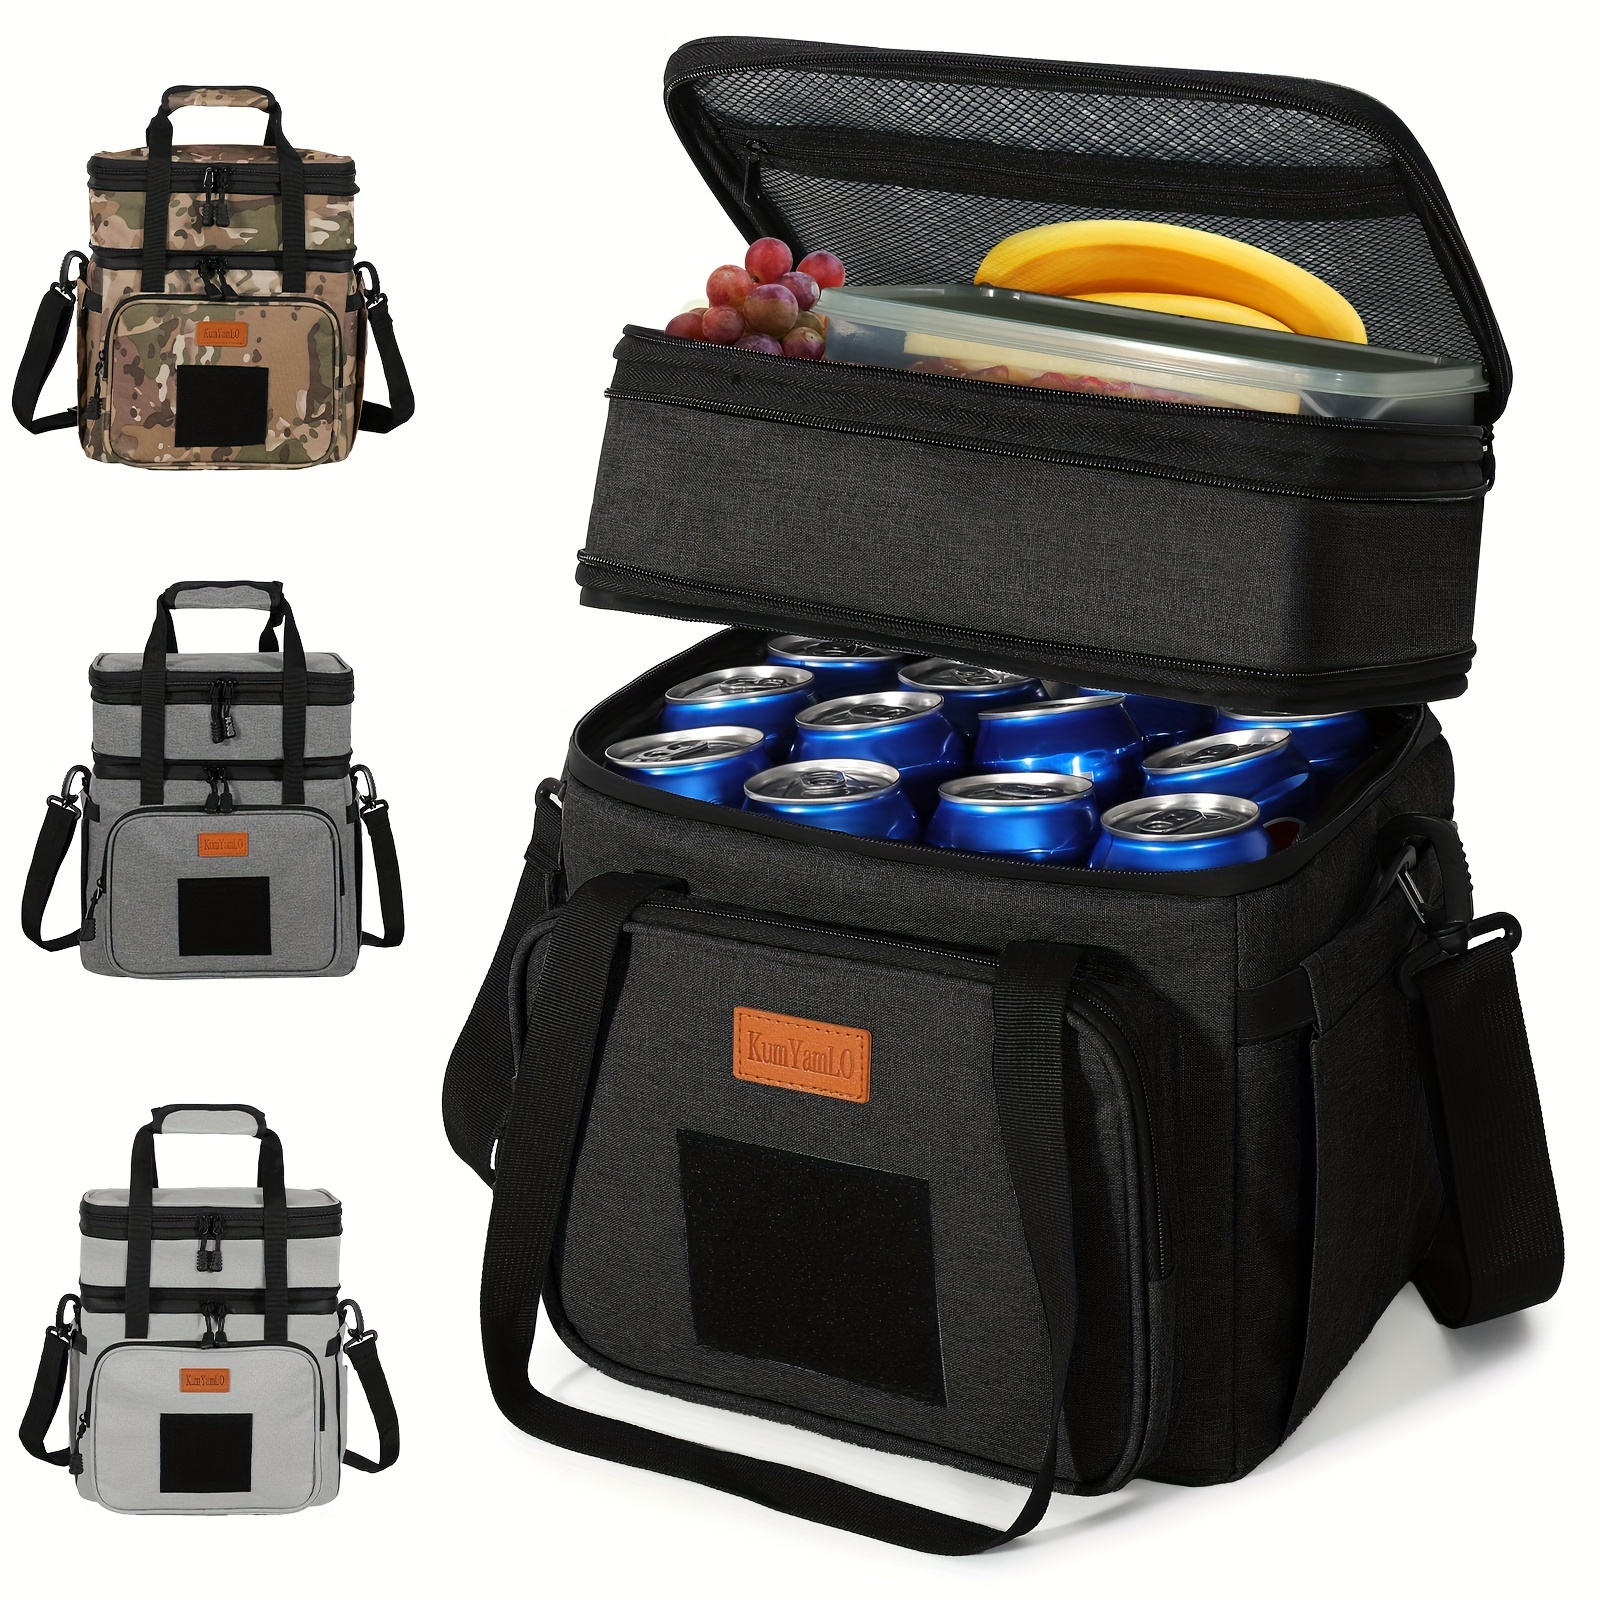 

Lunch Box & Bag For Men: Large Insulated Leakproof Soft Cooler Bag For Men & Women